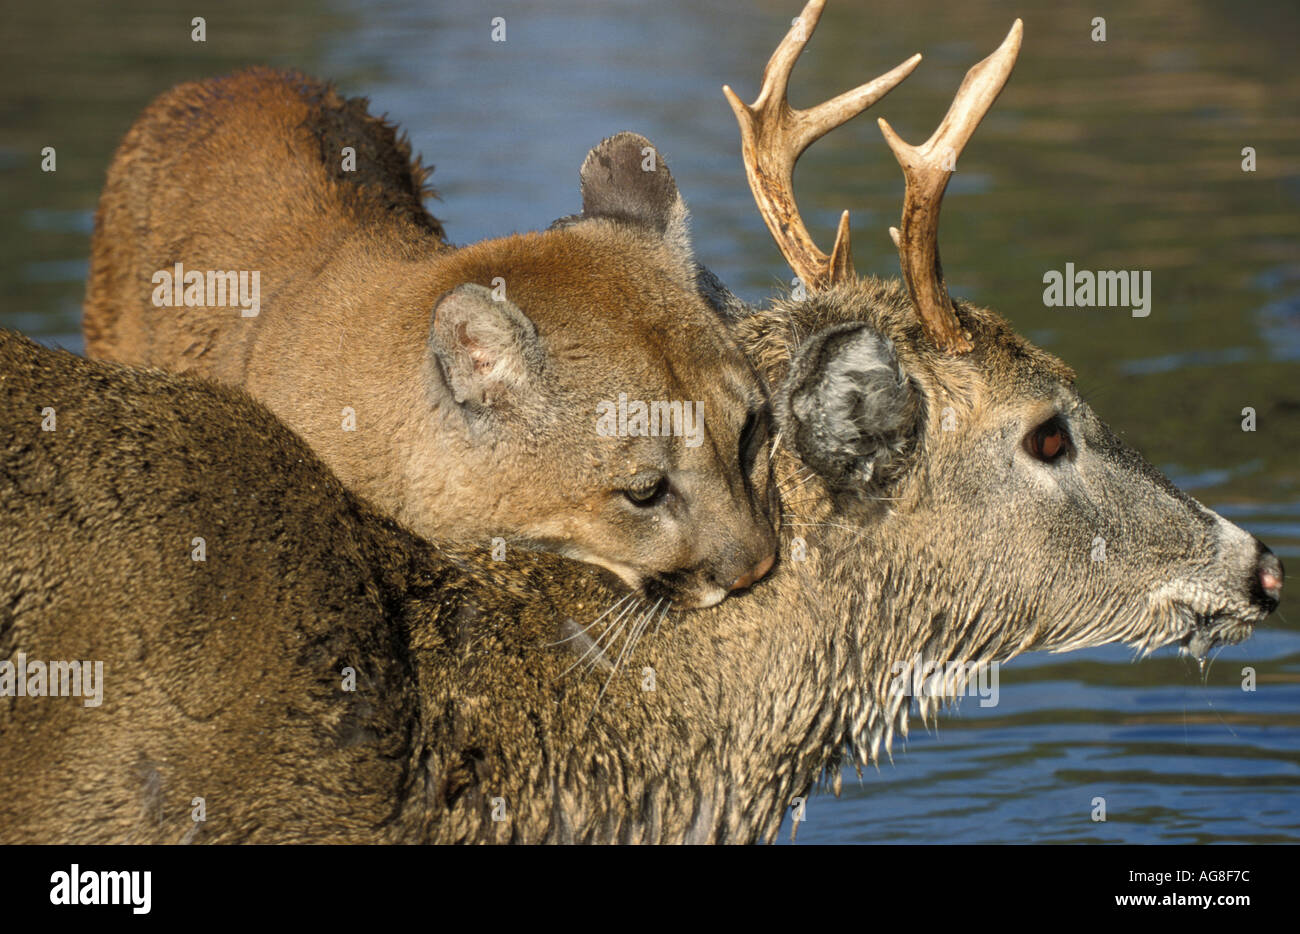 Mountain Lion Puma Cougar Felis concolor Minnesota on deer kill Stock Photo  - Alamy